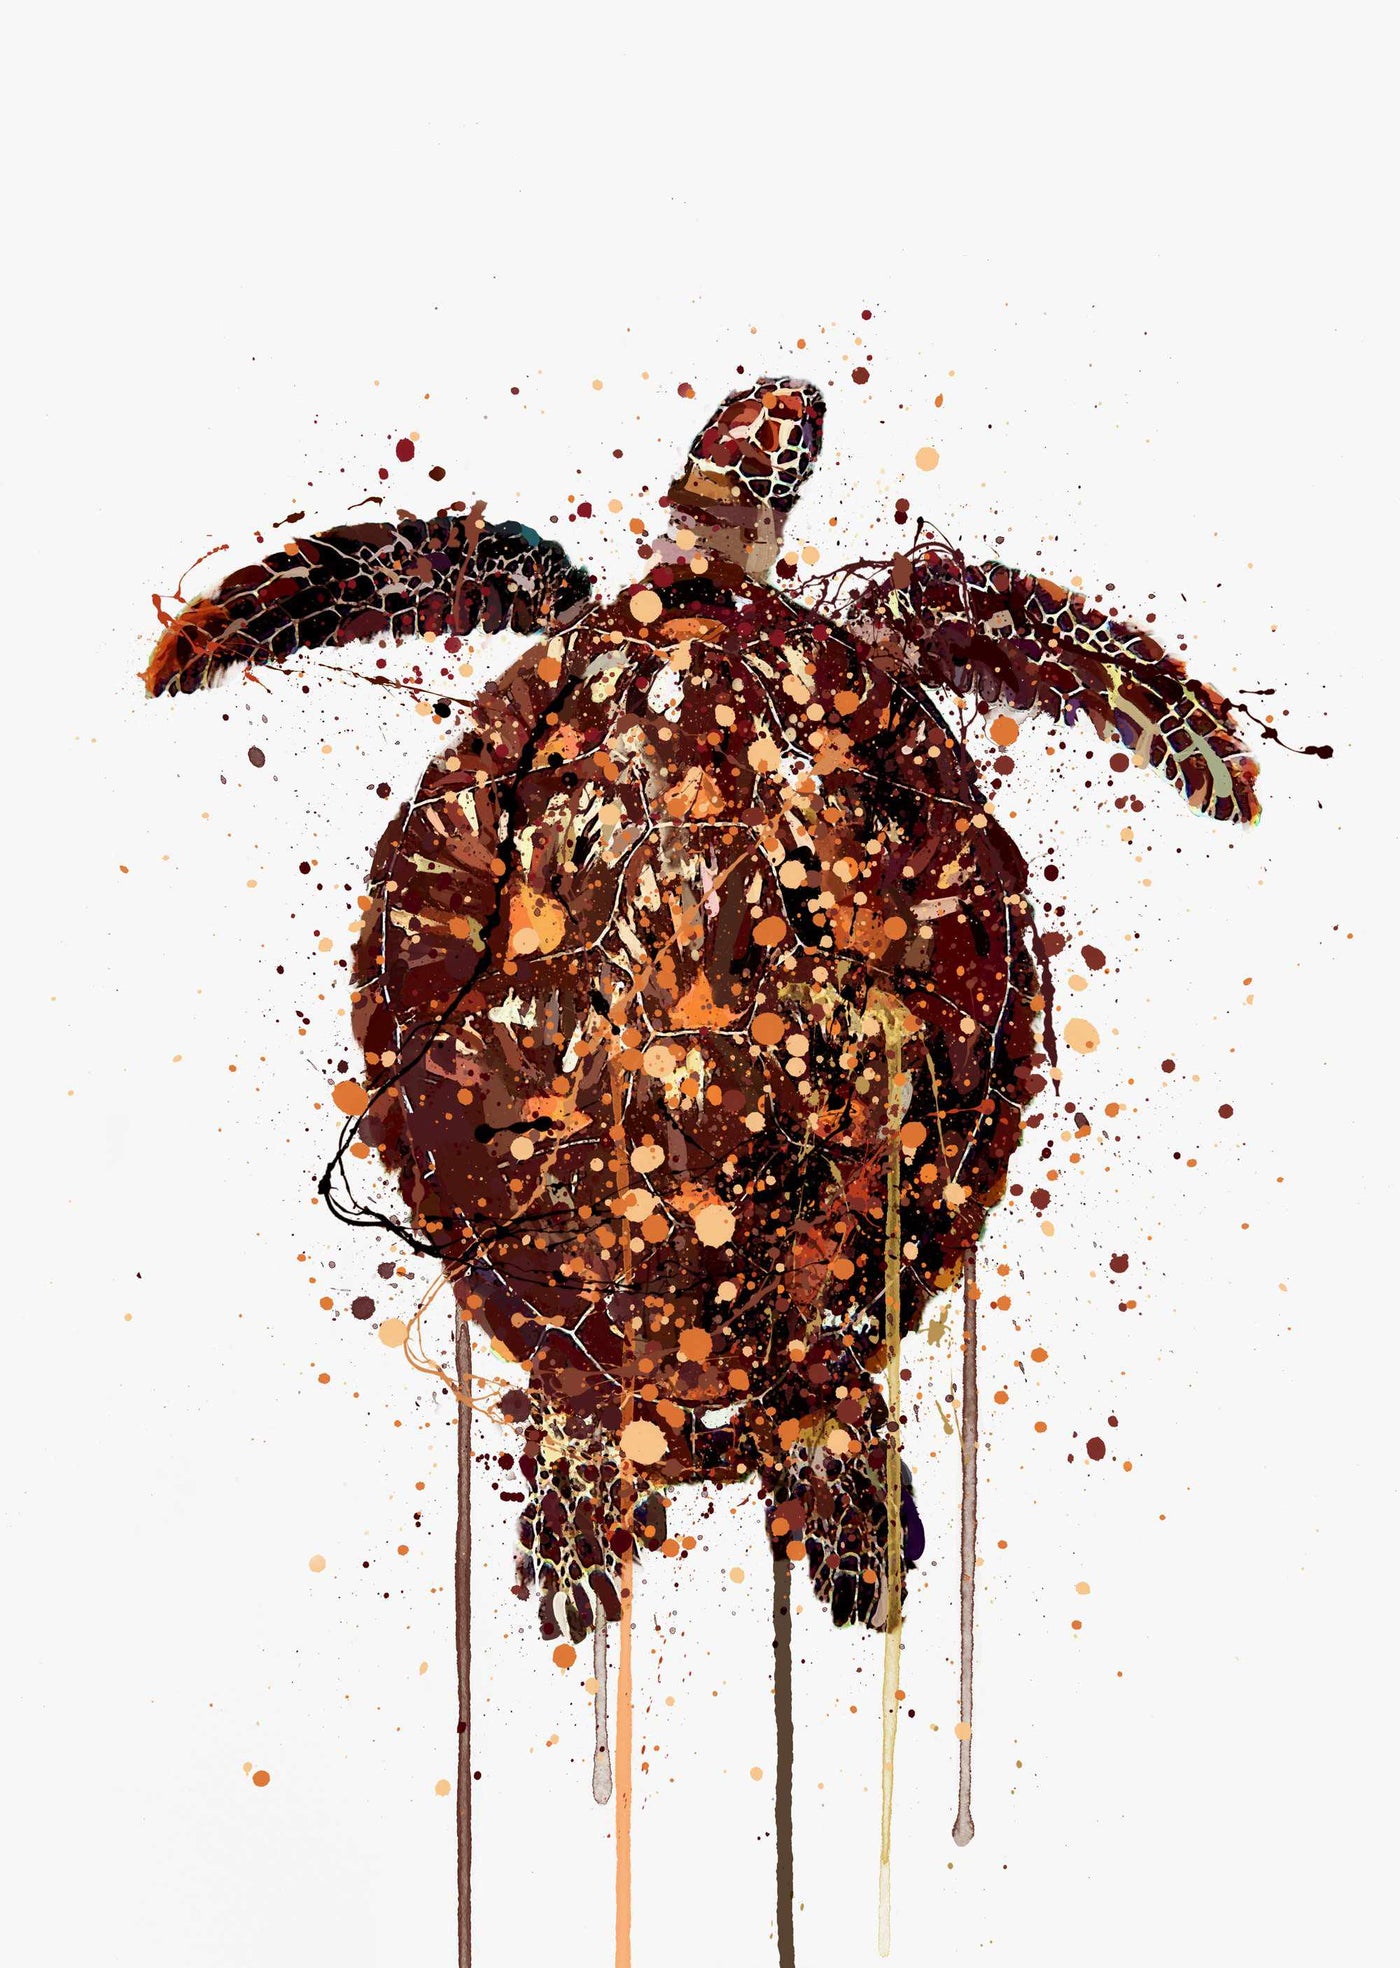 Sea Creature Wall Art Print 'Turtle'-We Love Prints